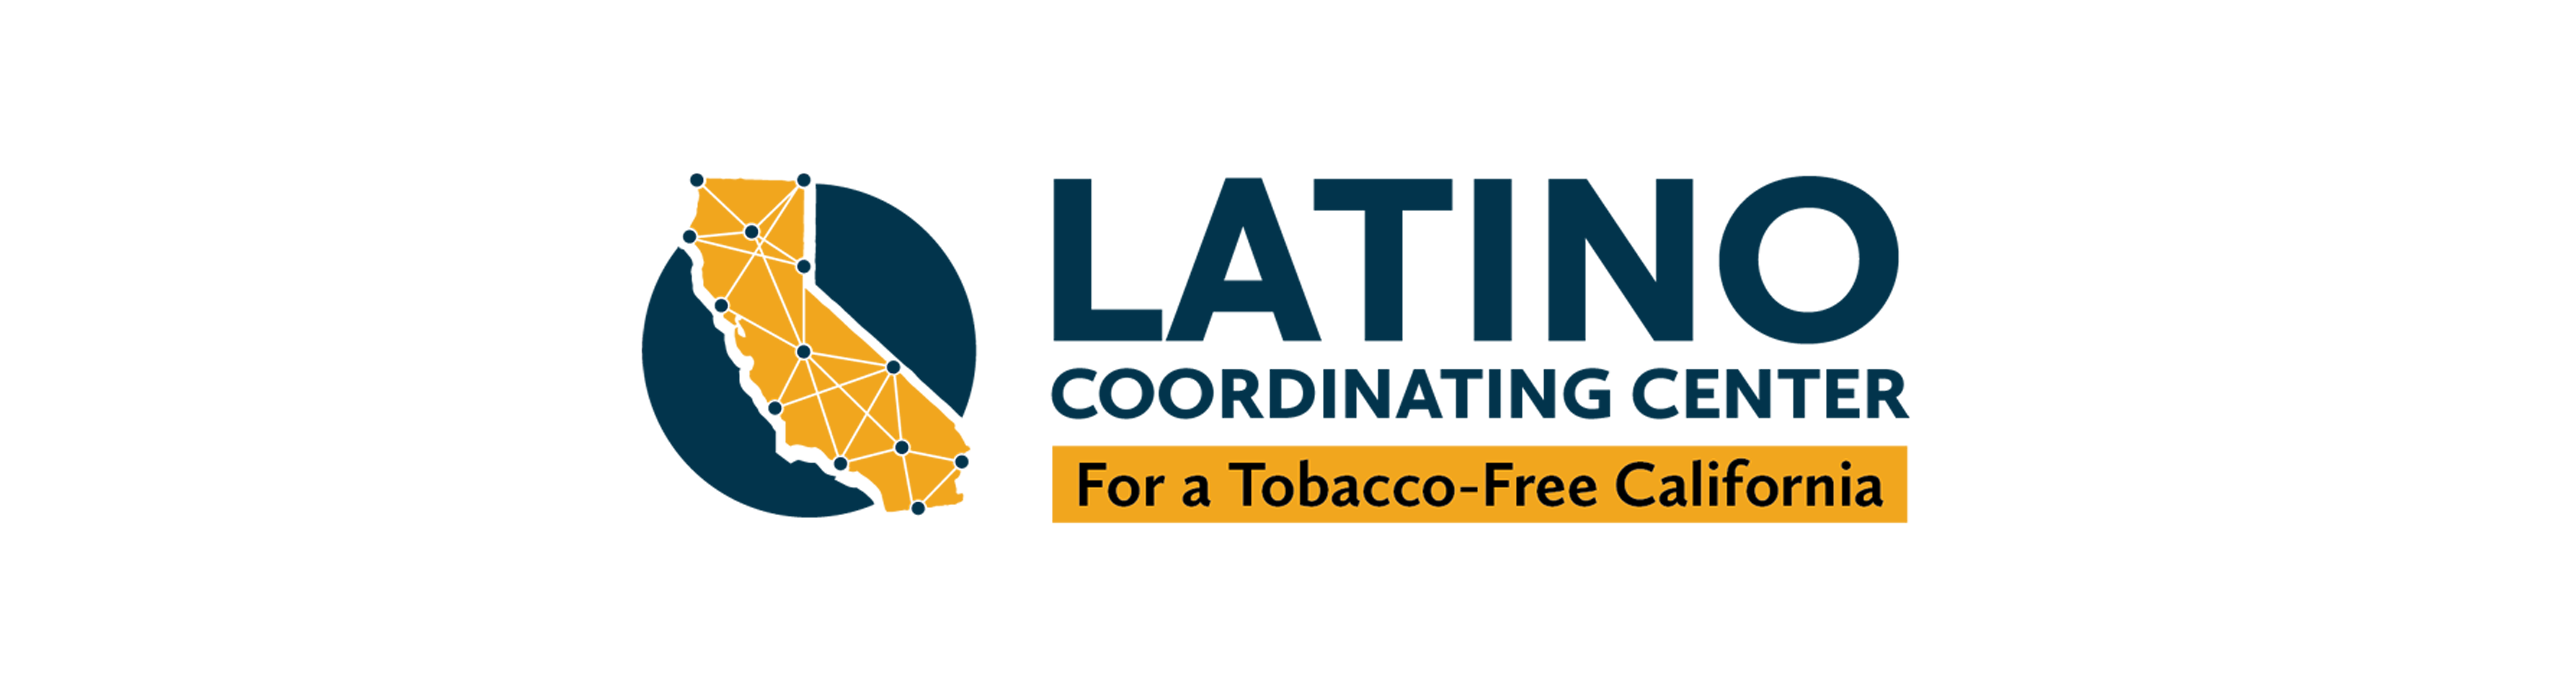 Latino Coordinating Center for a Tobacco-Free California